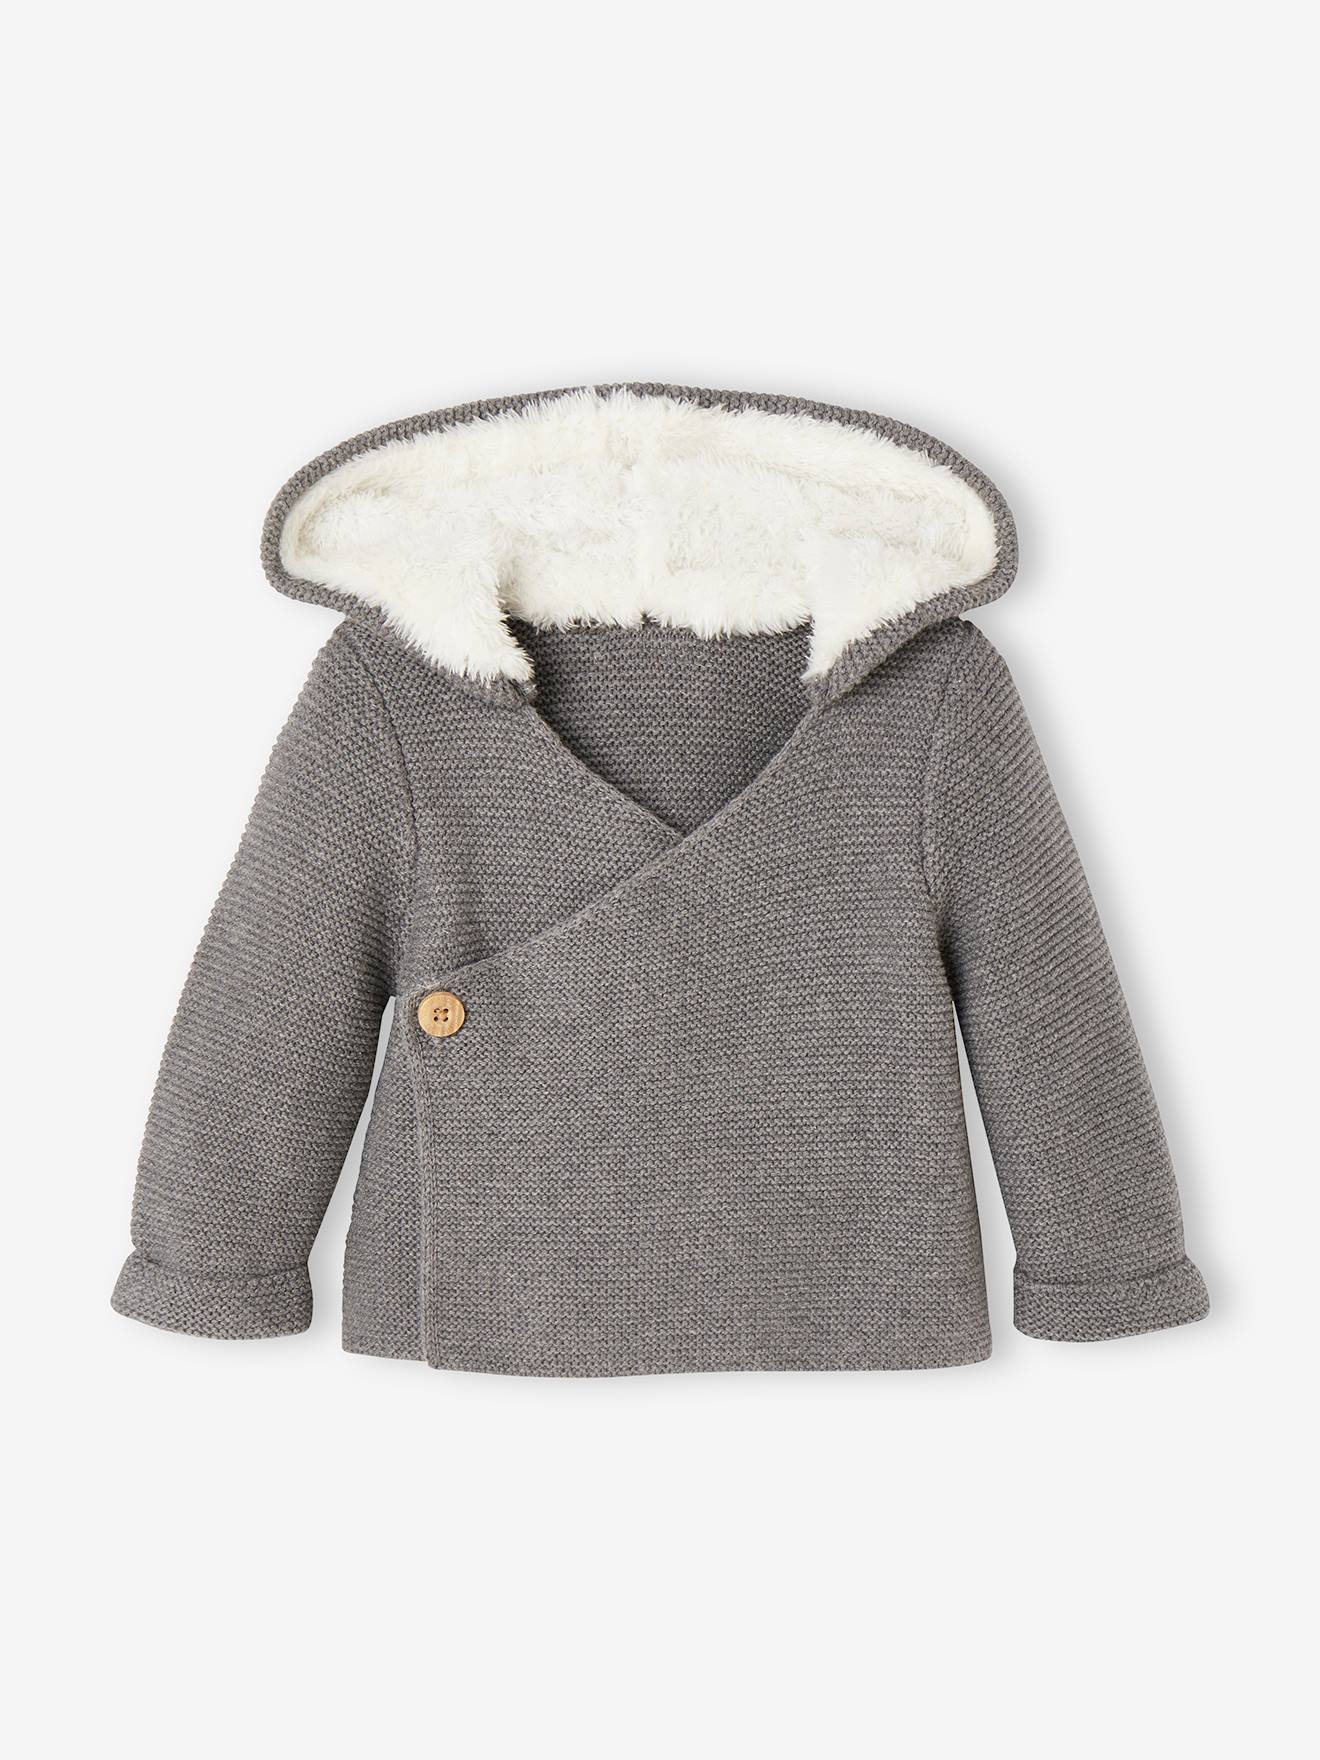 Hooded Cardigan for Babies, Faux Fur Lining marl grey